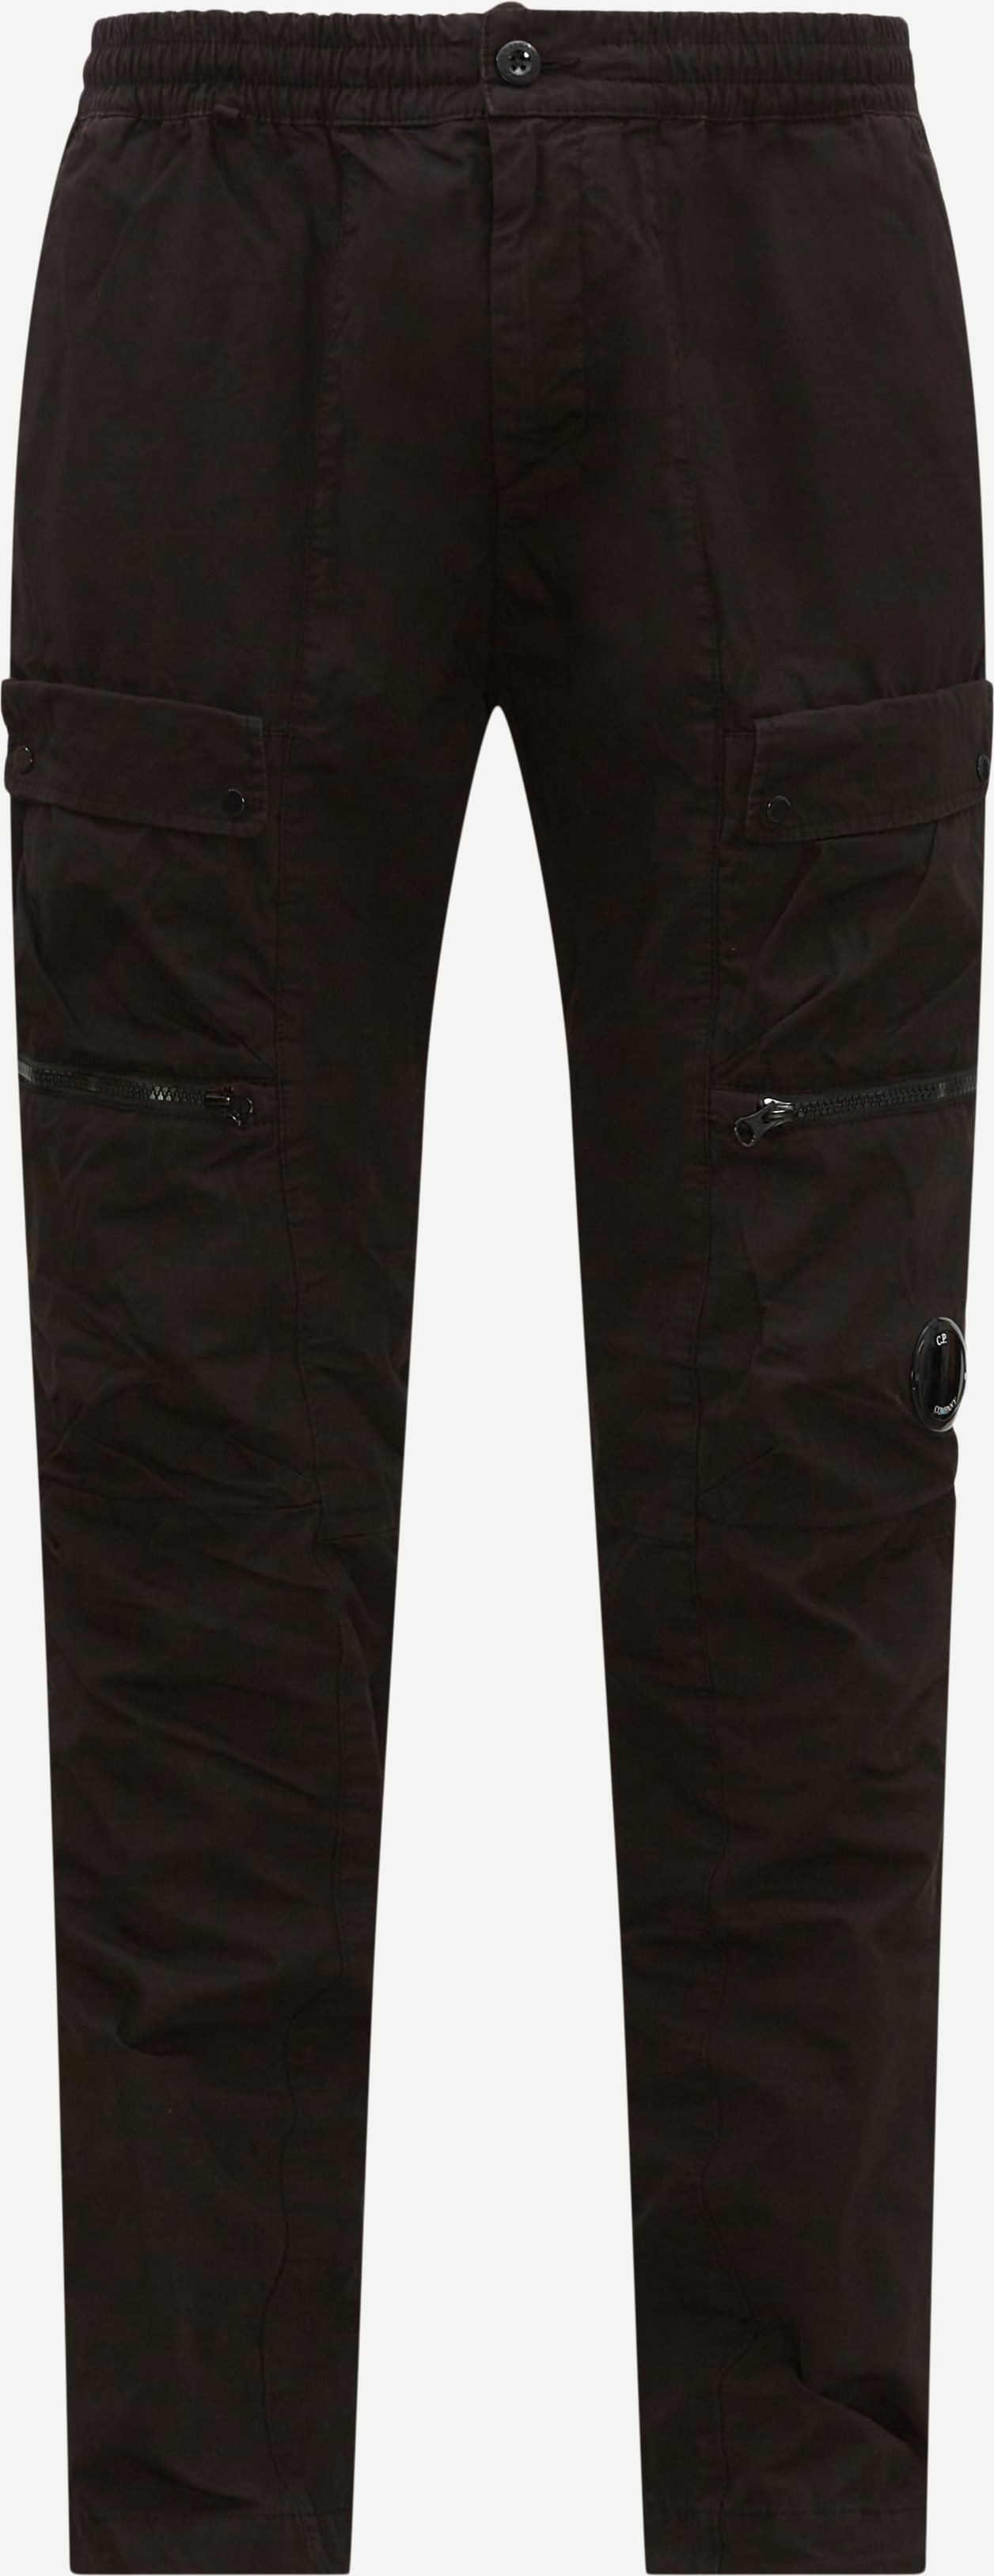 C.P. Company Trousers PA160A 6475G Black